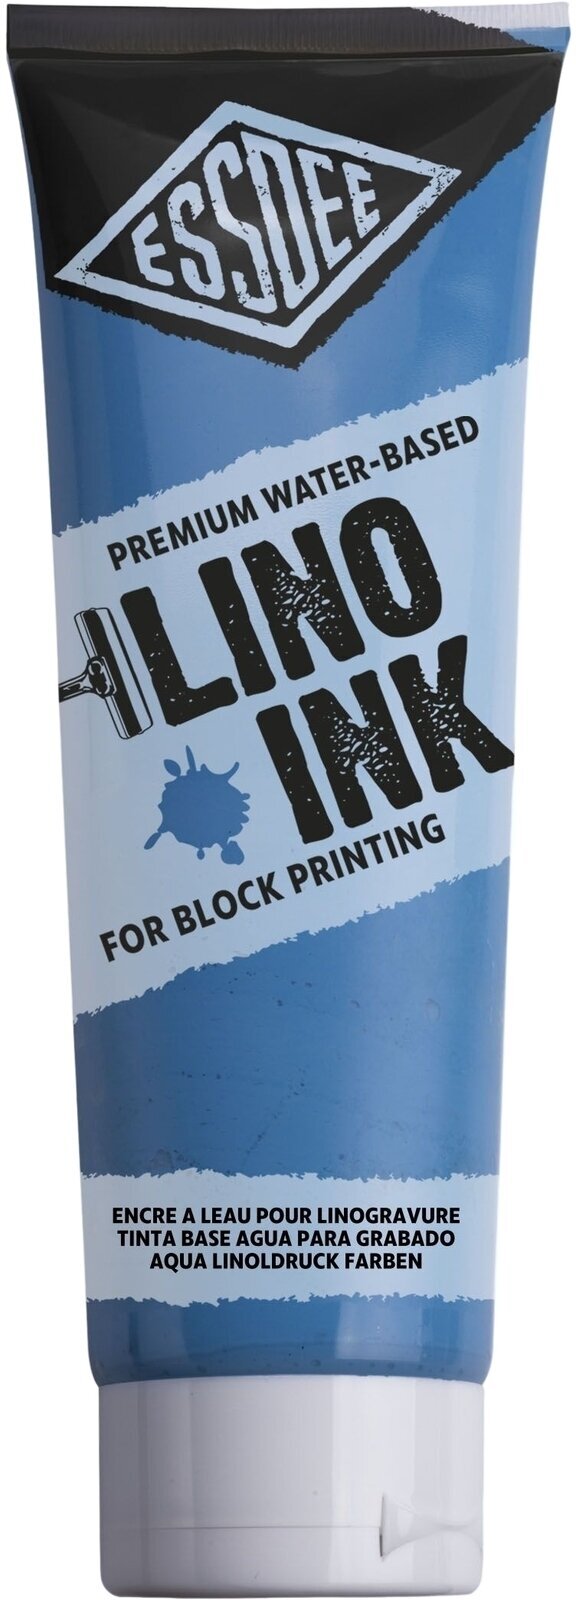 Farbe für Linolschnitt Essdee Block Printing Ink Farbe für Linolschnitt Fluorescent Blue 300 ml